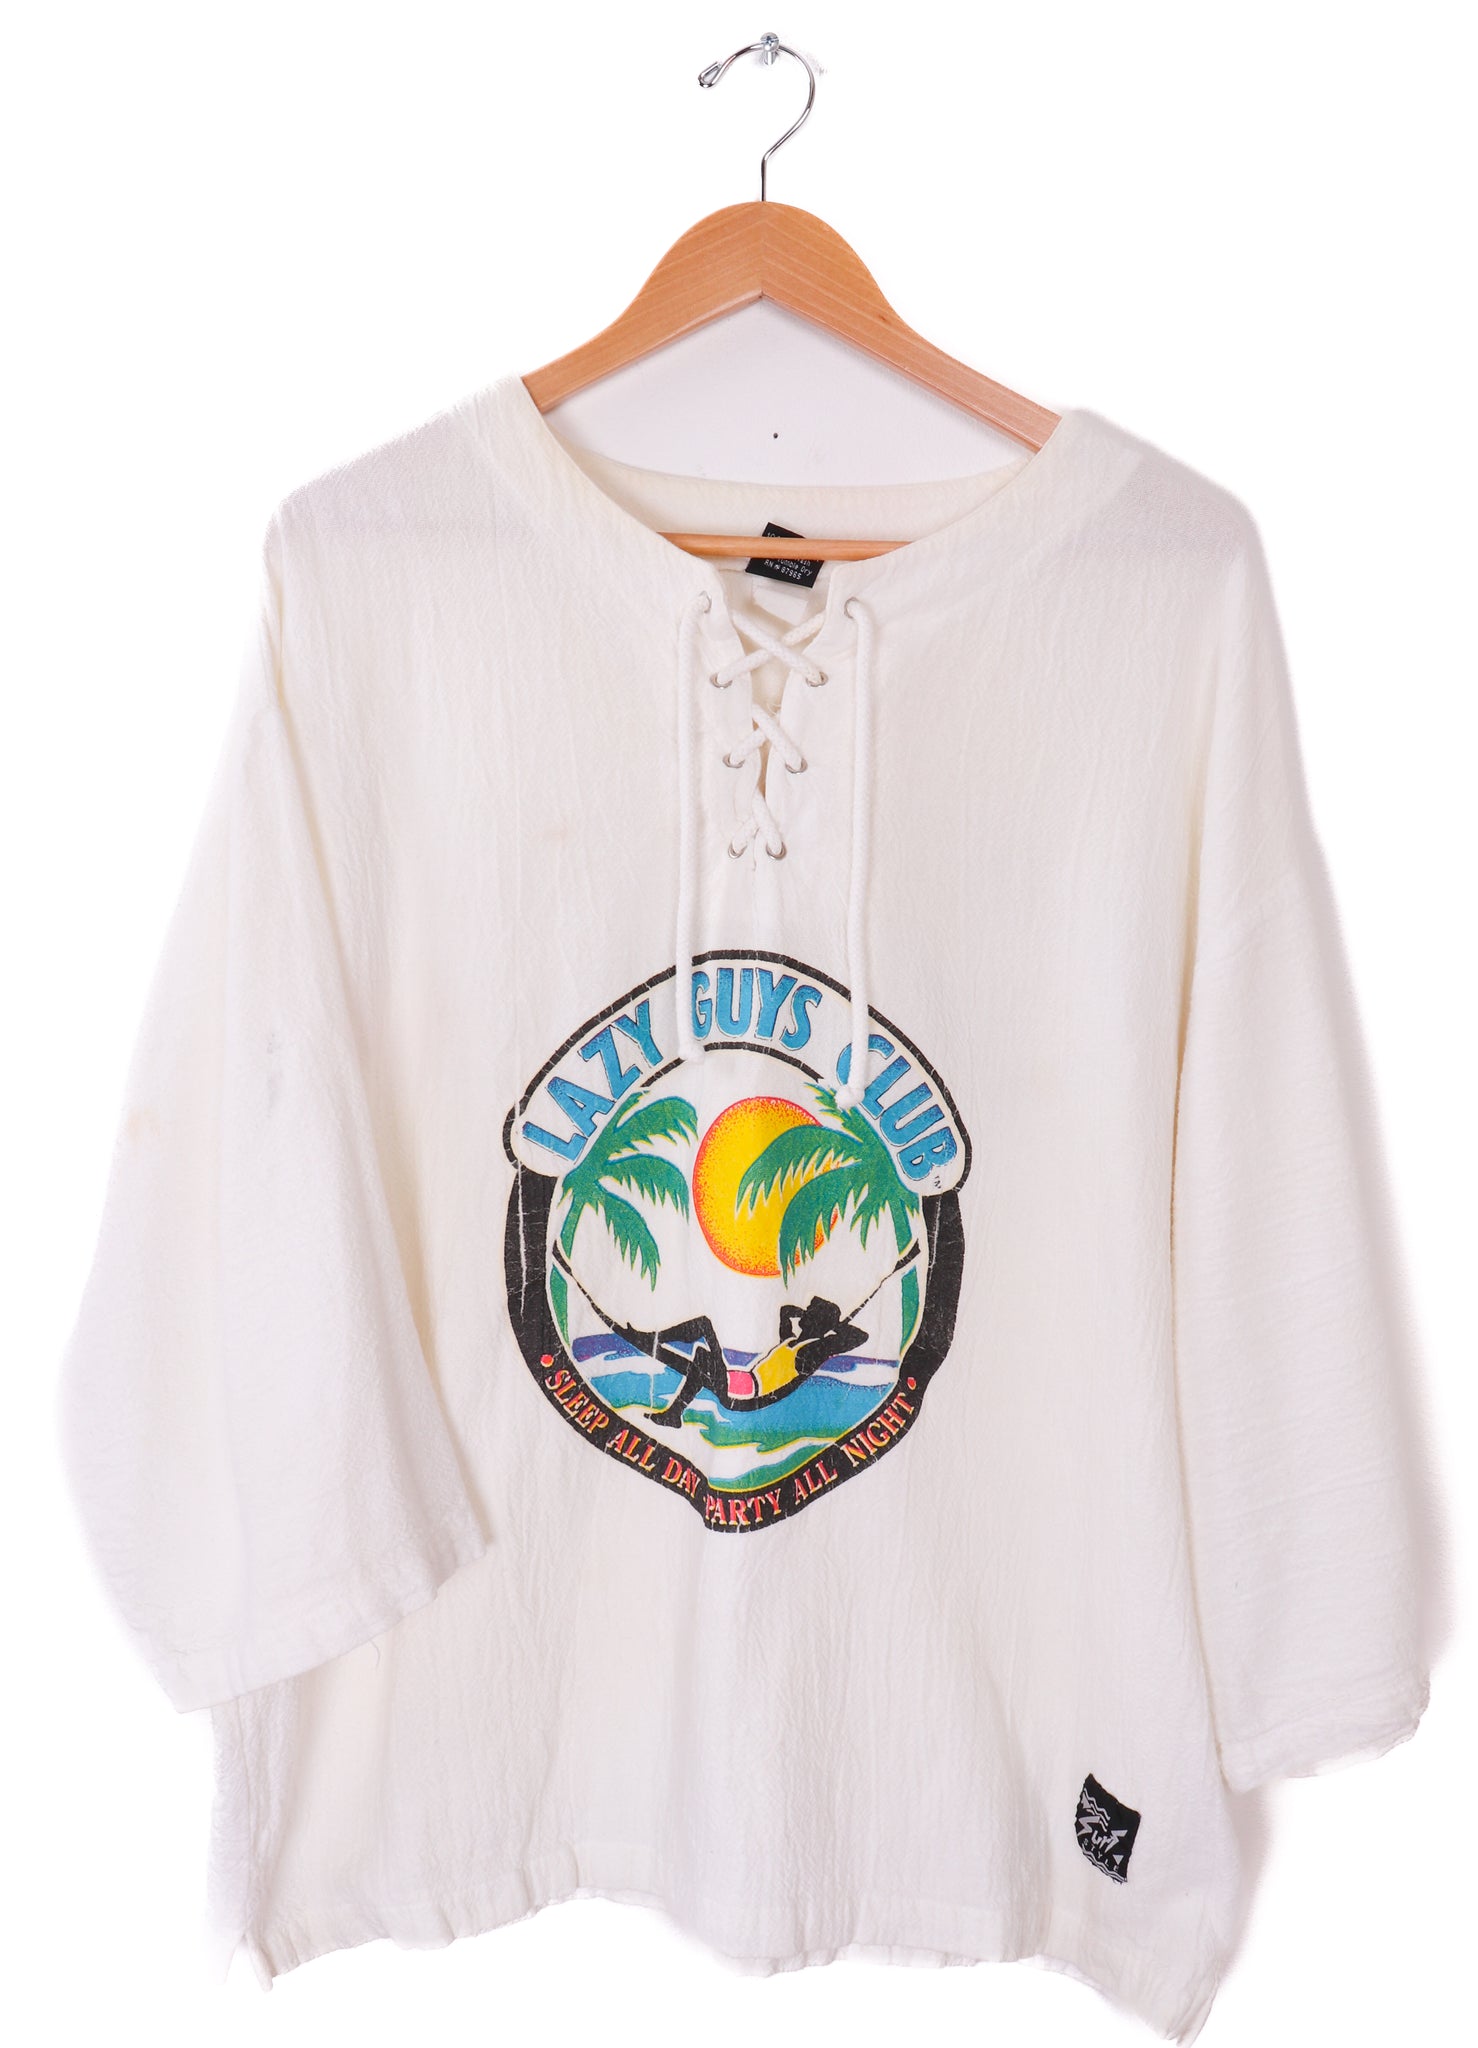 80s-90s Galveston Island, Texas Lazy Guys Club Linen Shirt